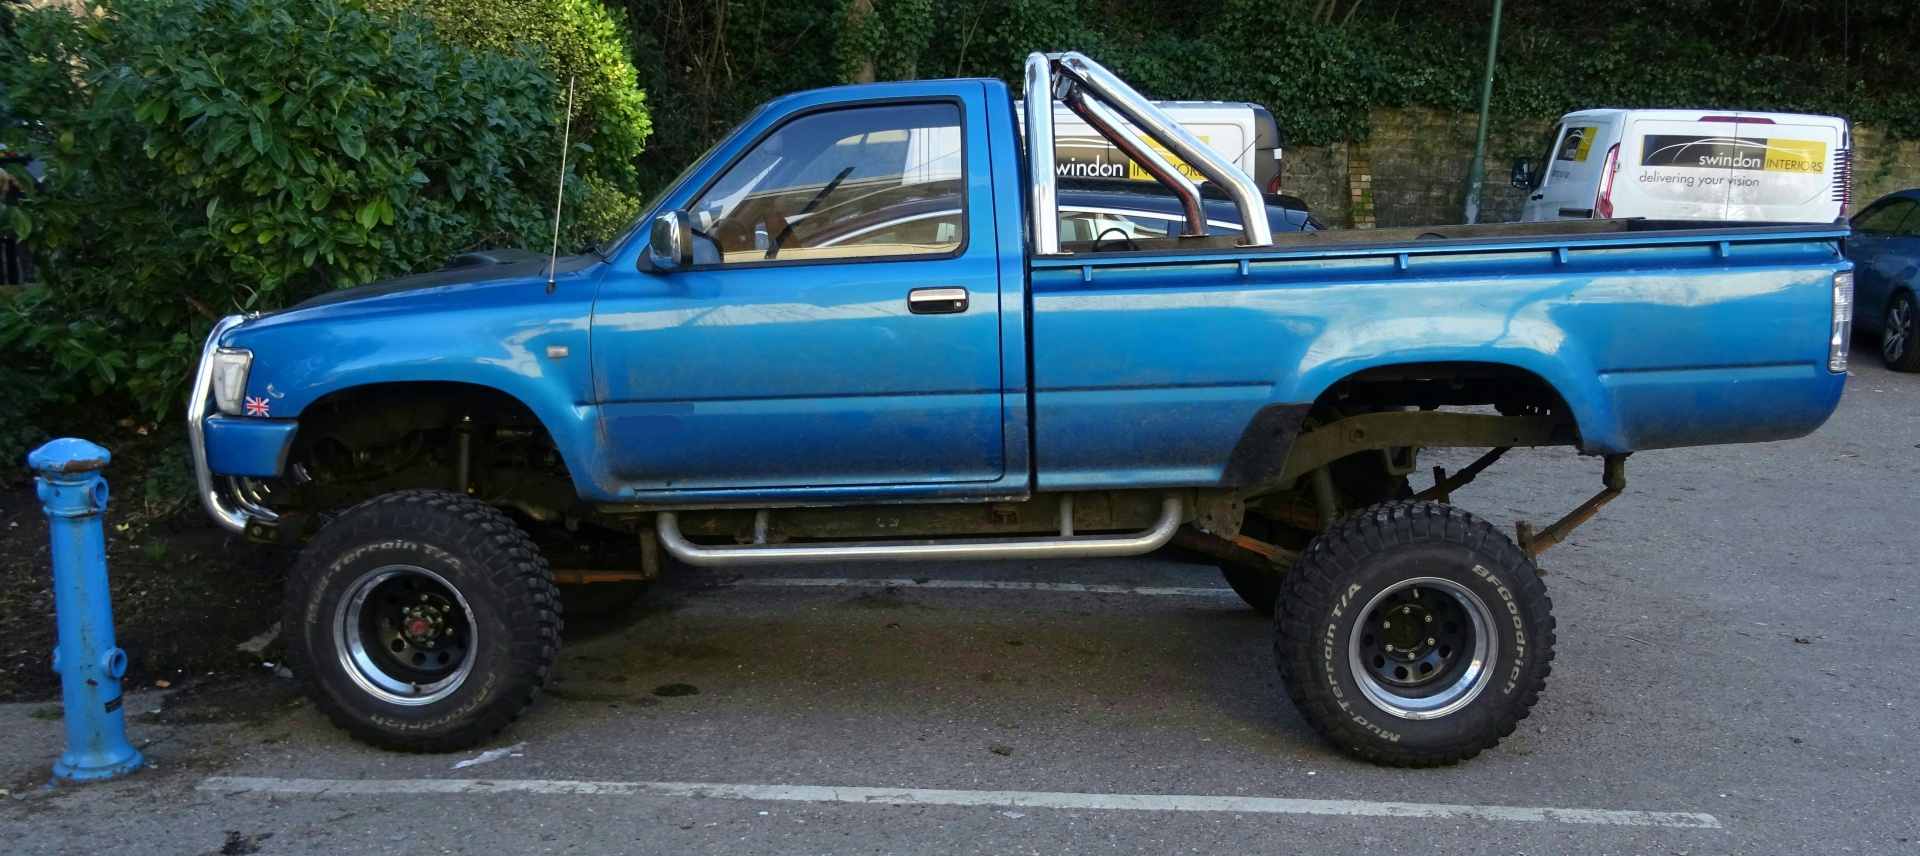 Lifted Metallic Blue truck